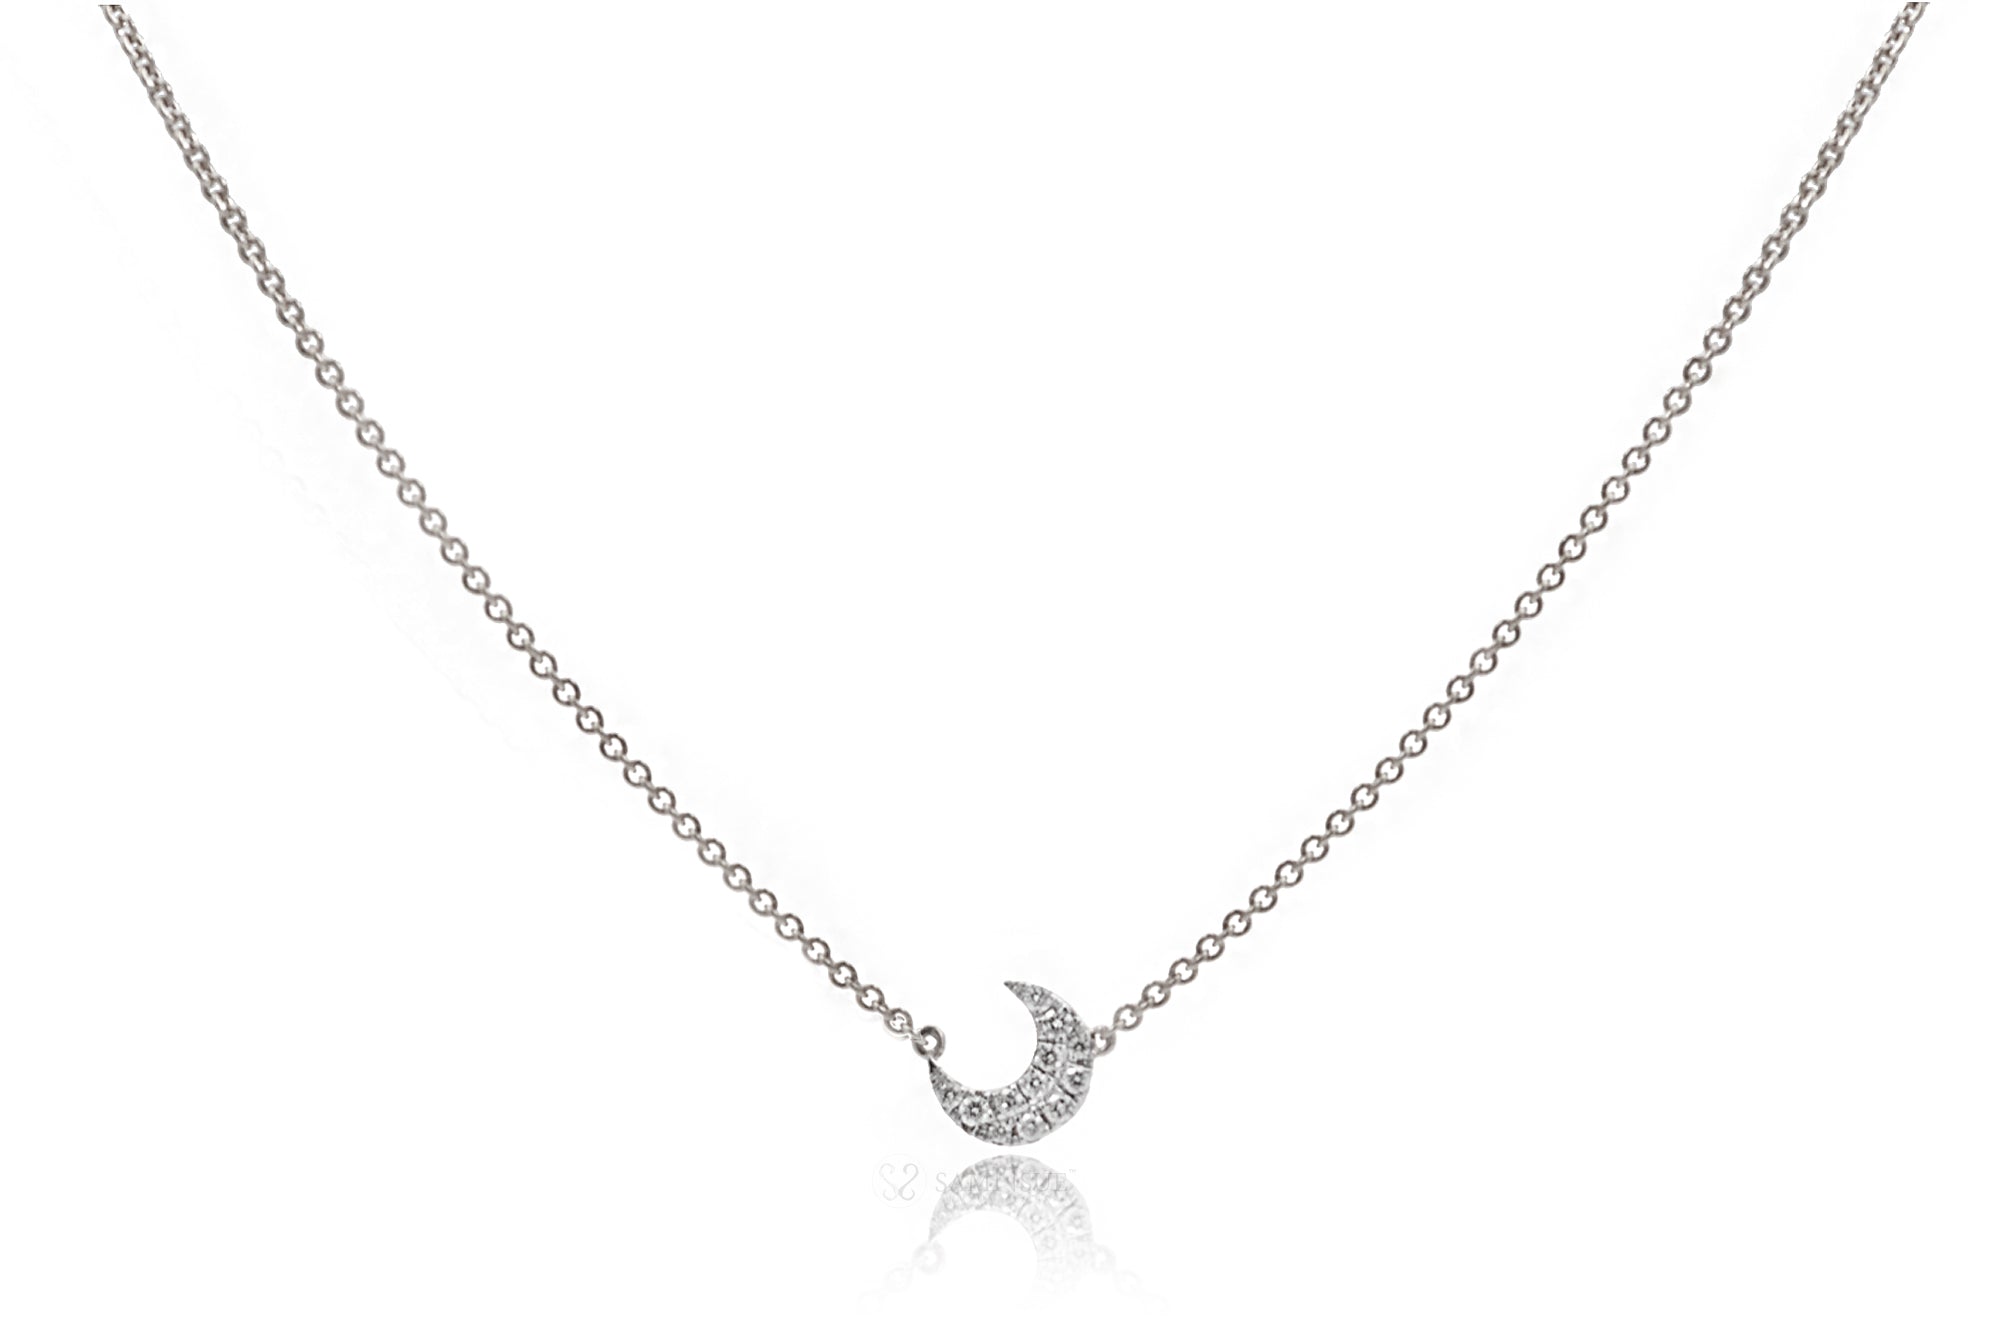 The Diamond Crescent Moon Pavé Plate Necklace